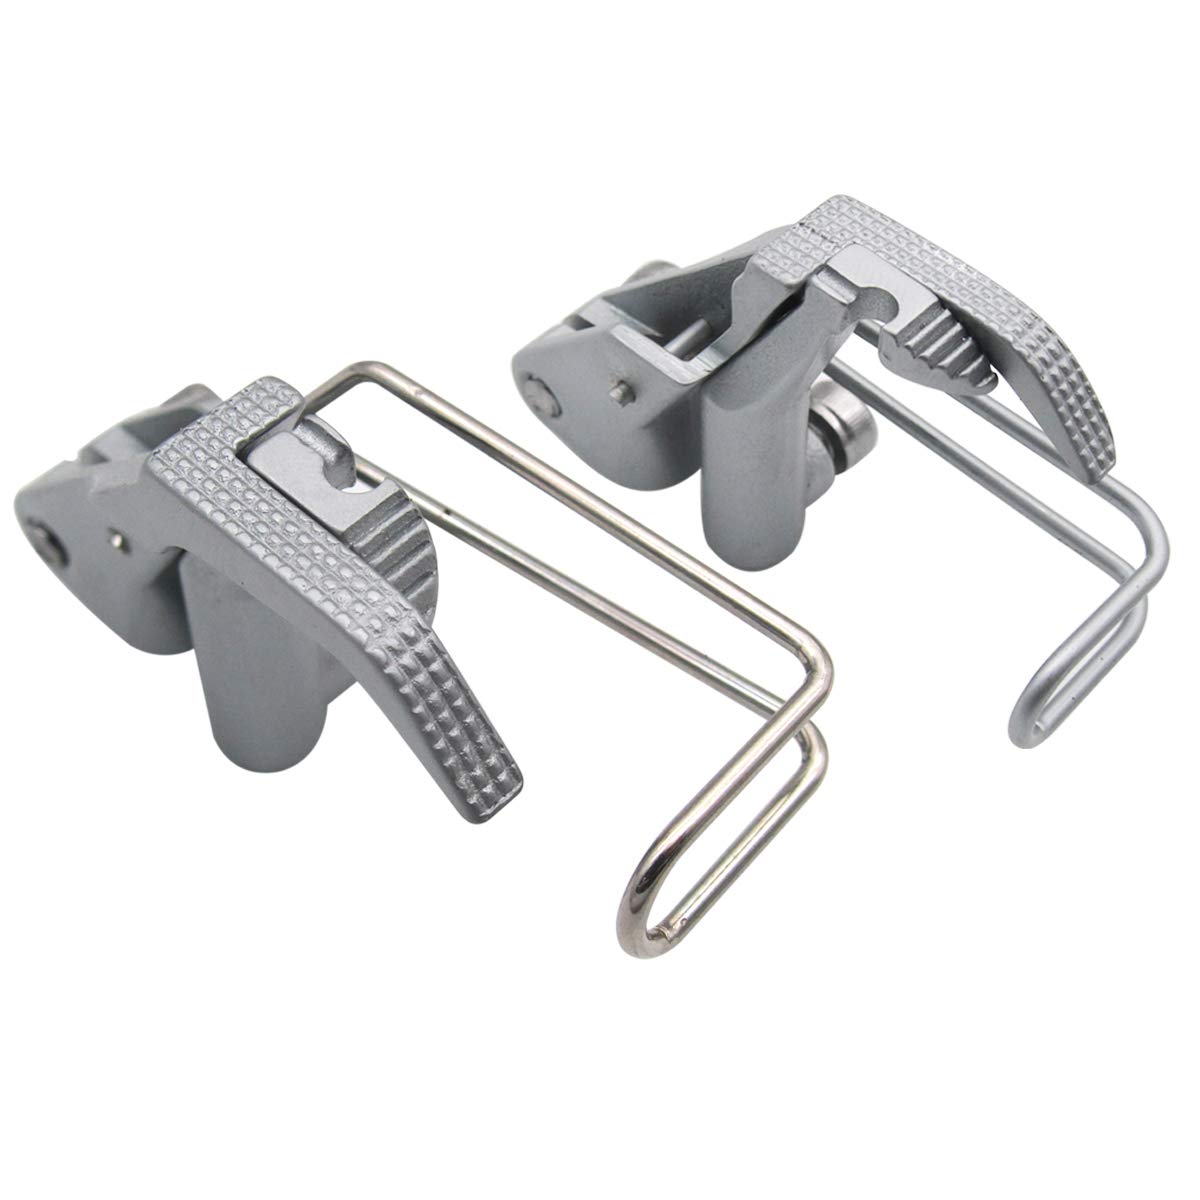 CKPSMS Brand -2SET #GCKP367LN+GCKP367RN Right and Left Zipper Foot Compatible with Adler 367, 467, 669,767 Sewing Machine (GCKP367LN+GCKP367RN)